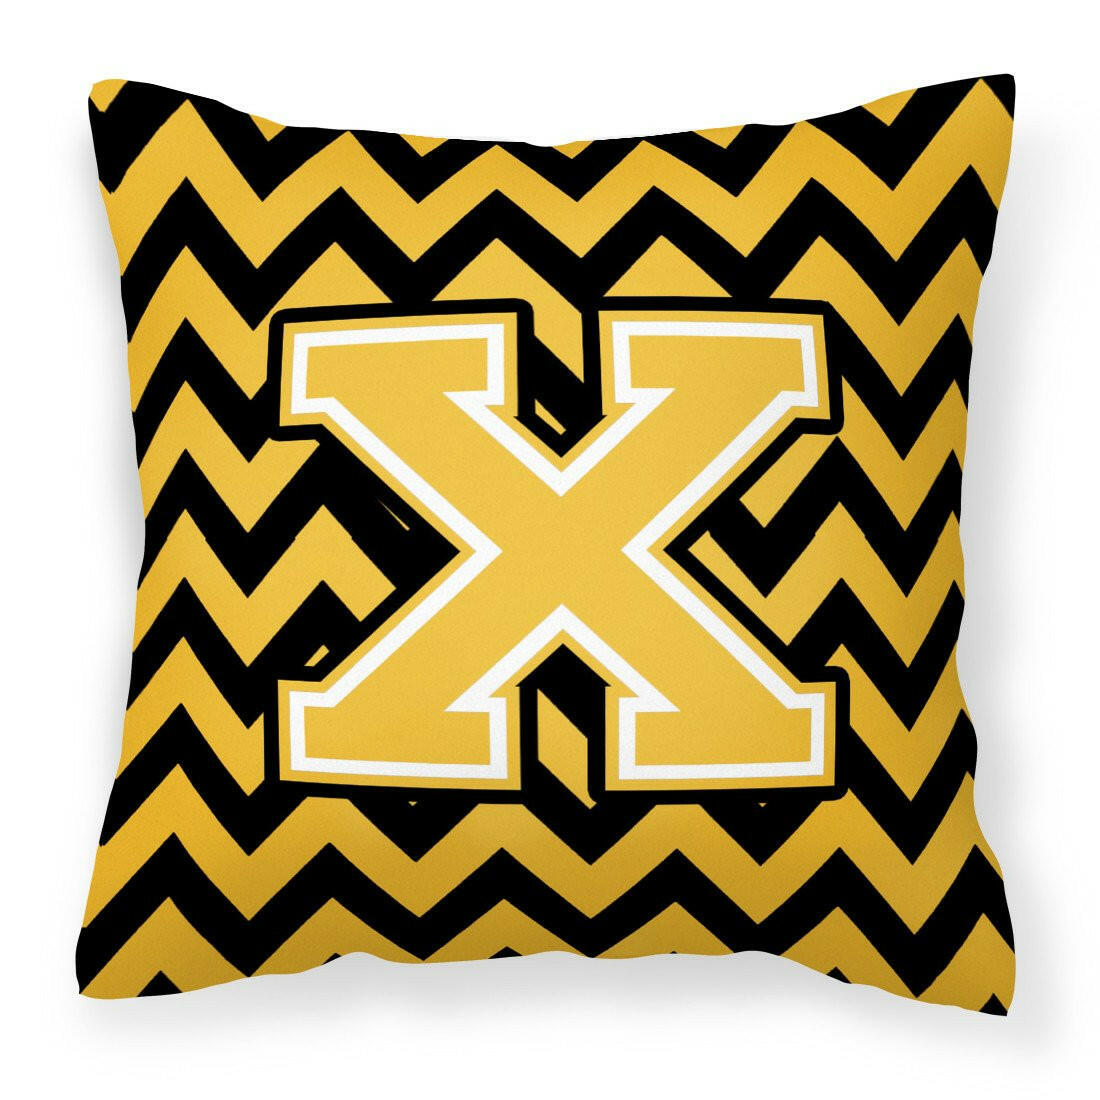 Letter X Chevron Black and Gold Fabric Decorative Pillow CJ1053-XPW1414 by Caroline's Treasures